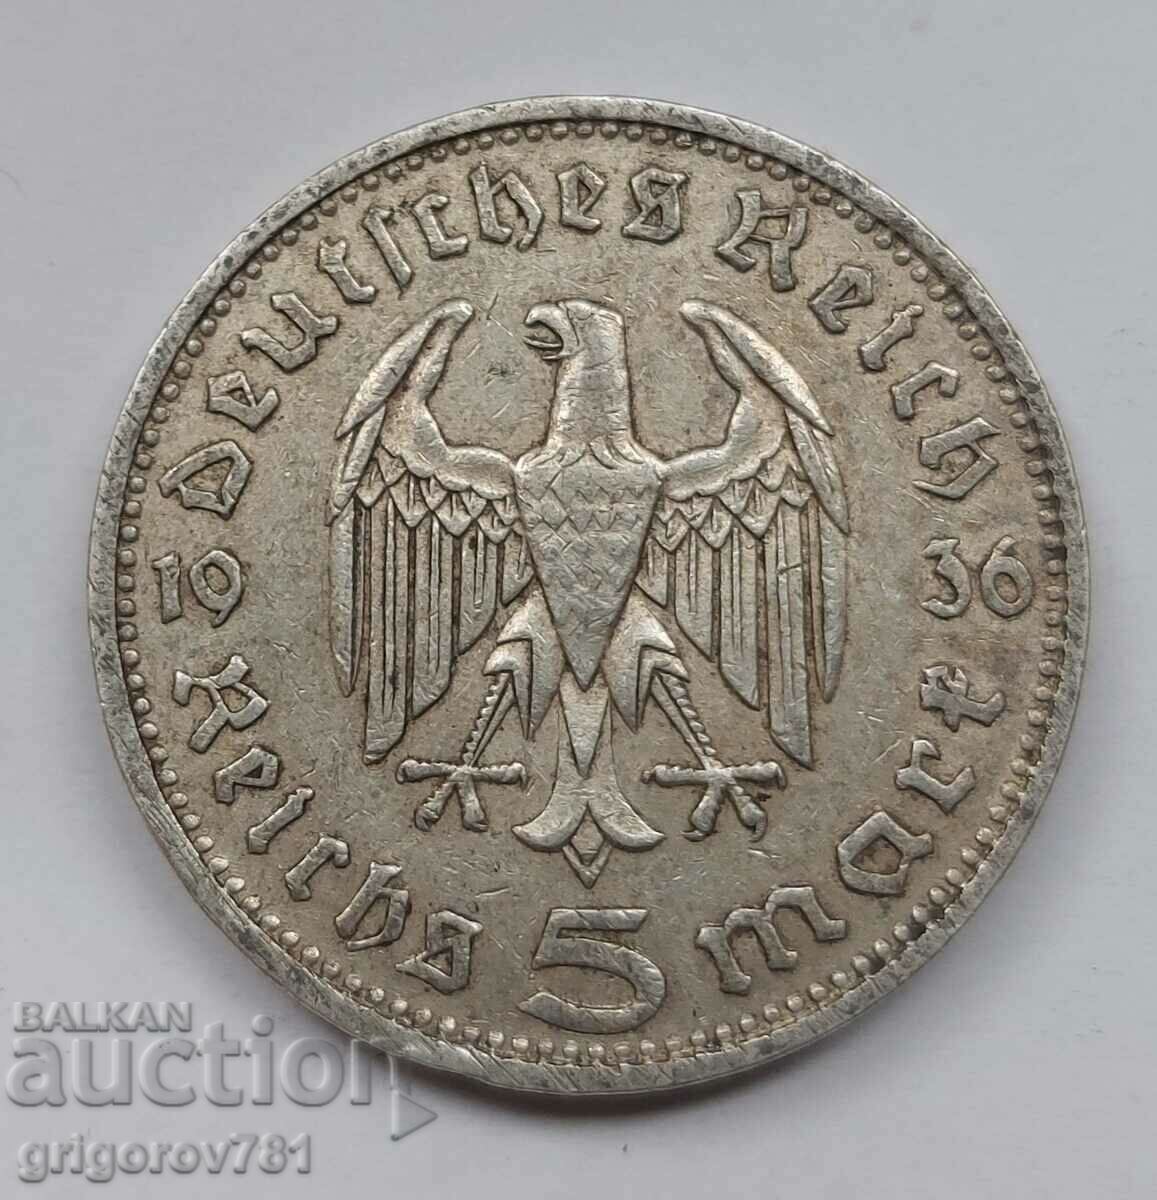 5 Mark Silver Γερμανία 1936 D III Reich Ασημένιο νόμισμα #18